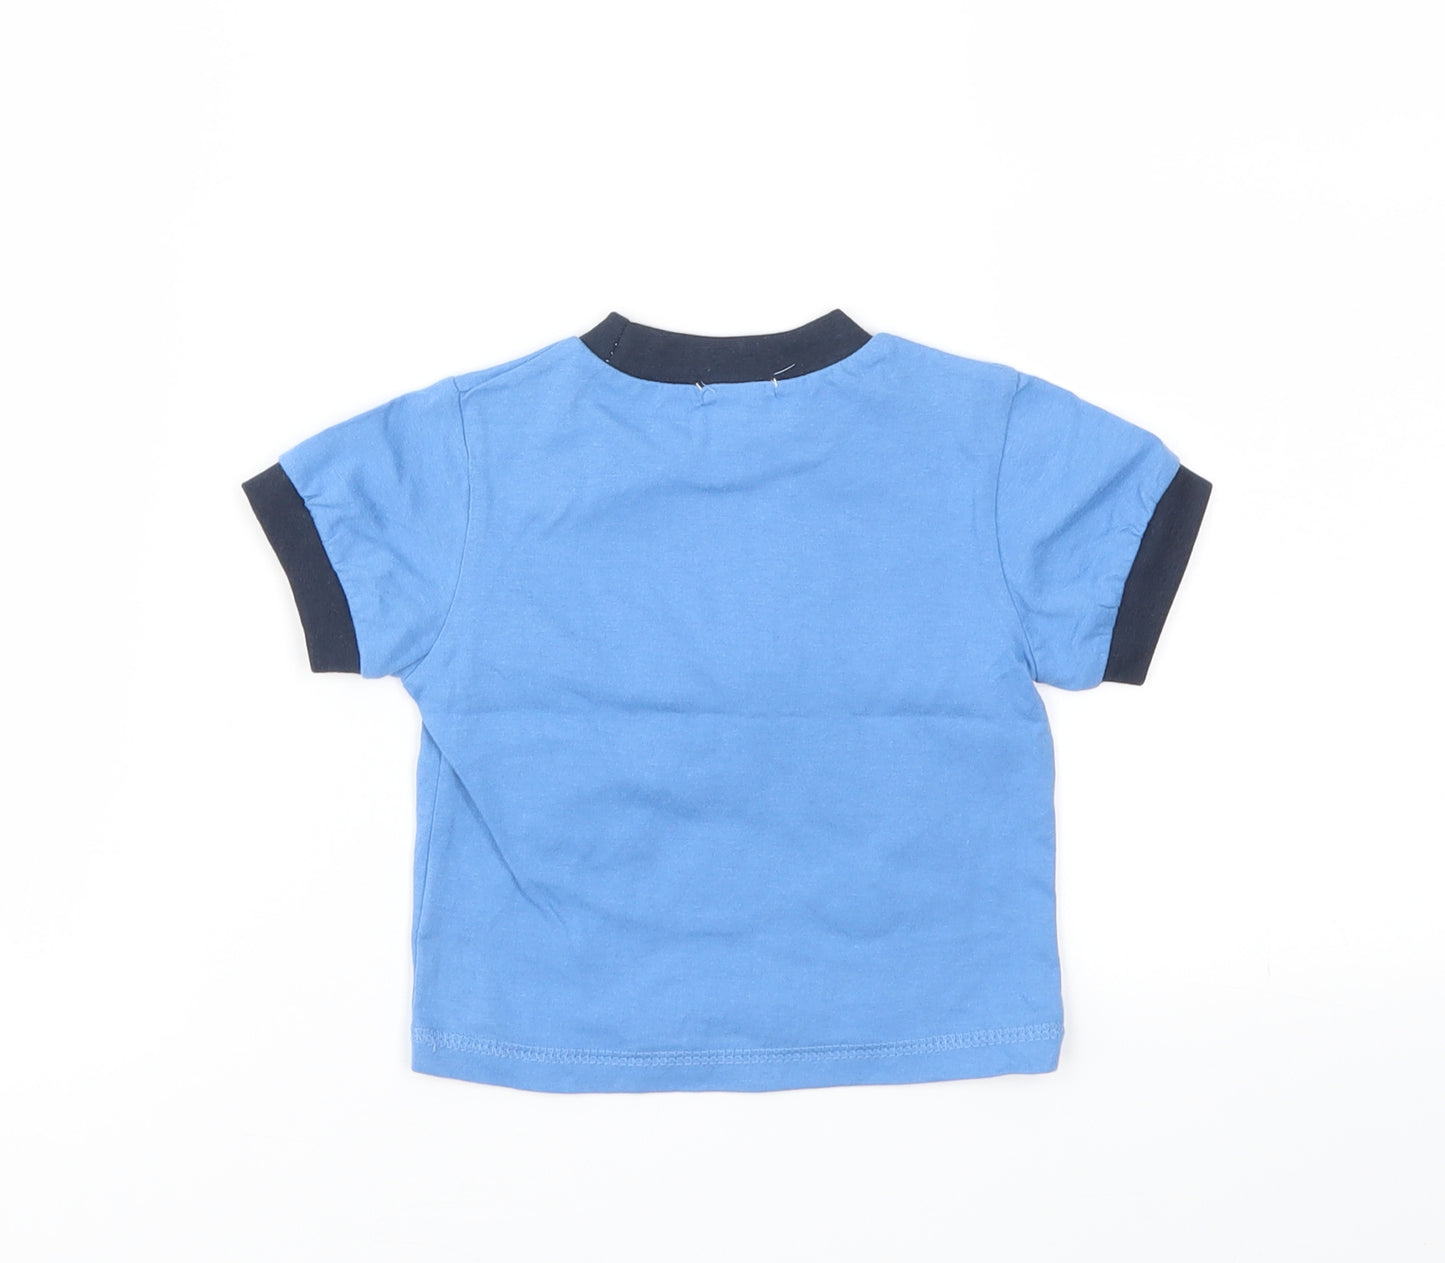 Pitter Patter Boys Blue   Basic T-Shirt Size 0-3 Months